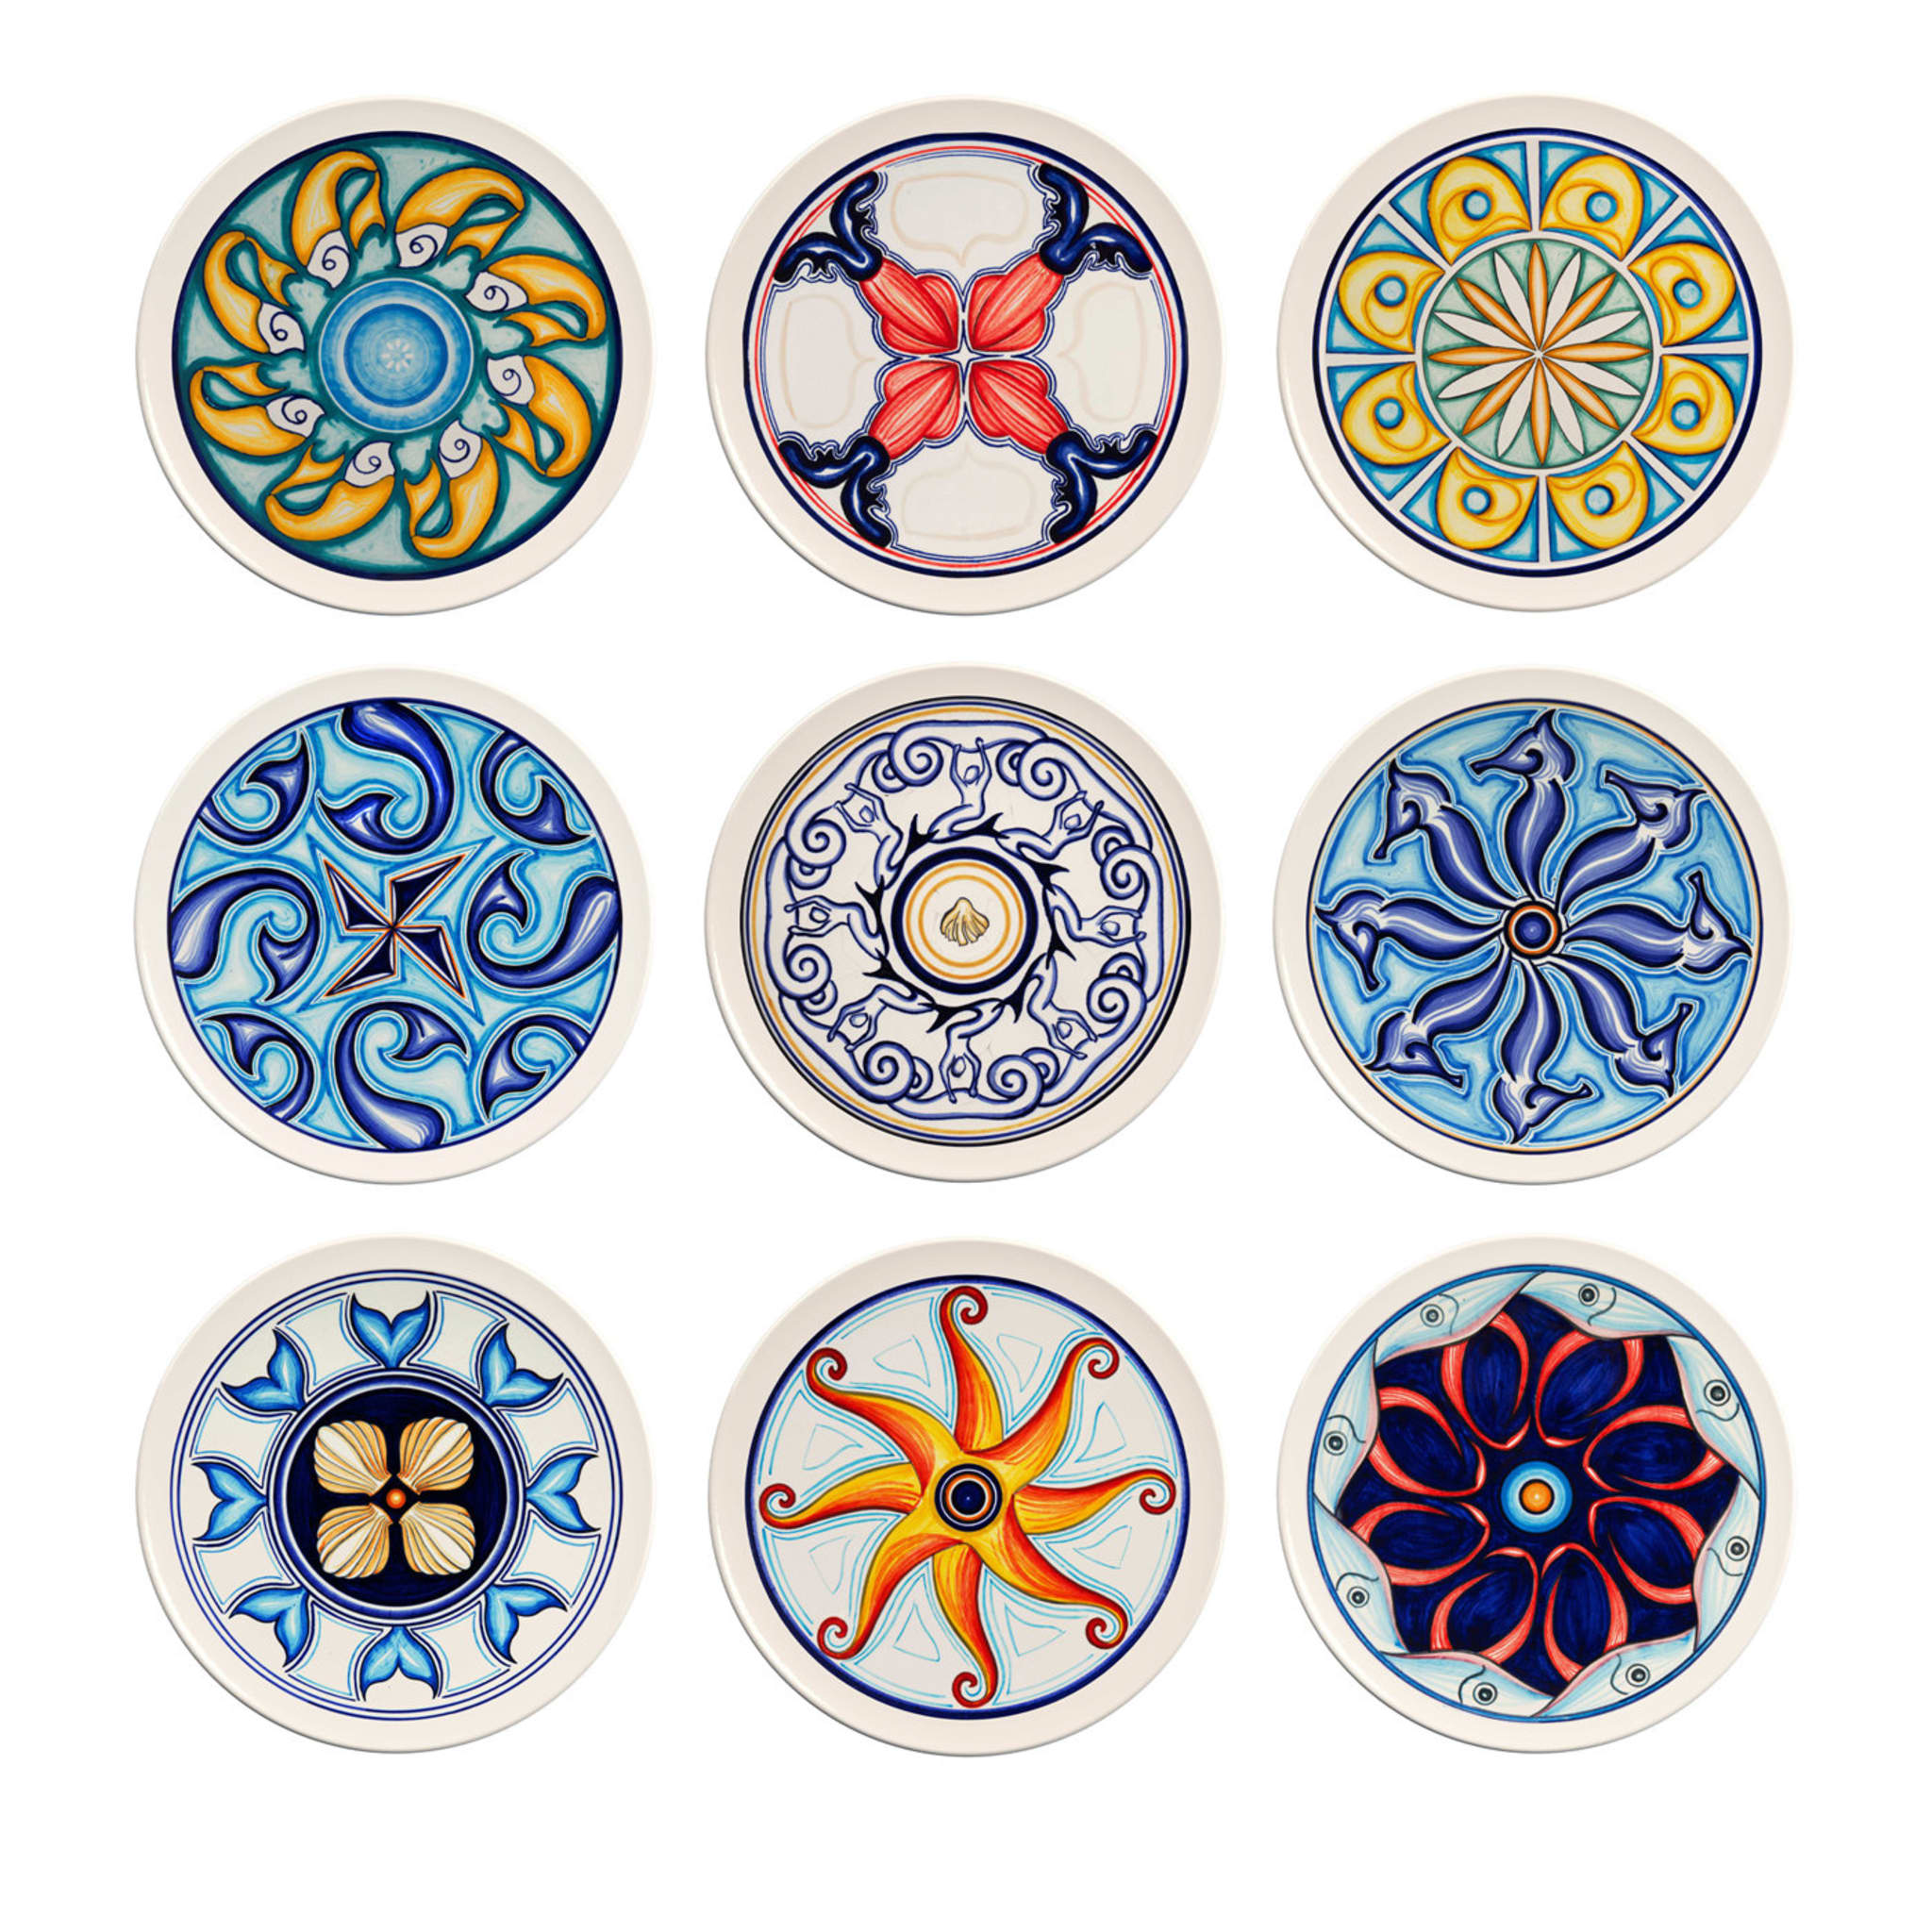 Colapesce Set of 9 Decorative Plates #1 - Main view